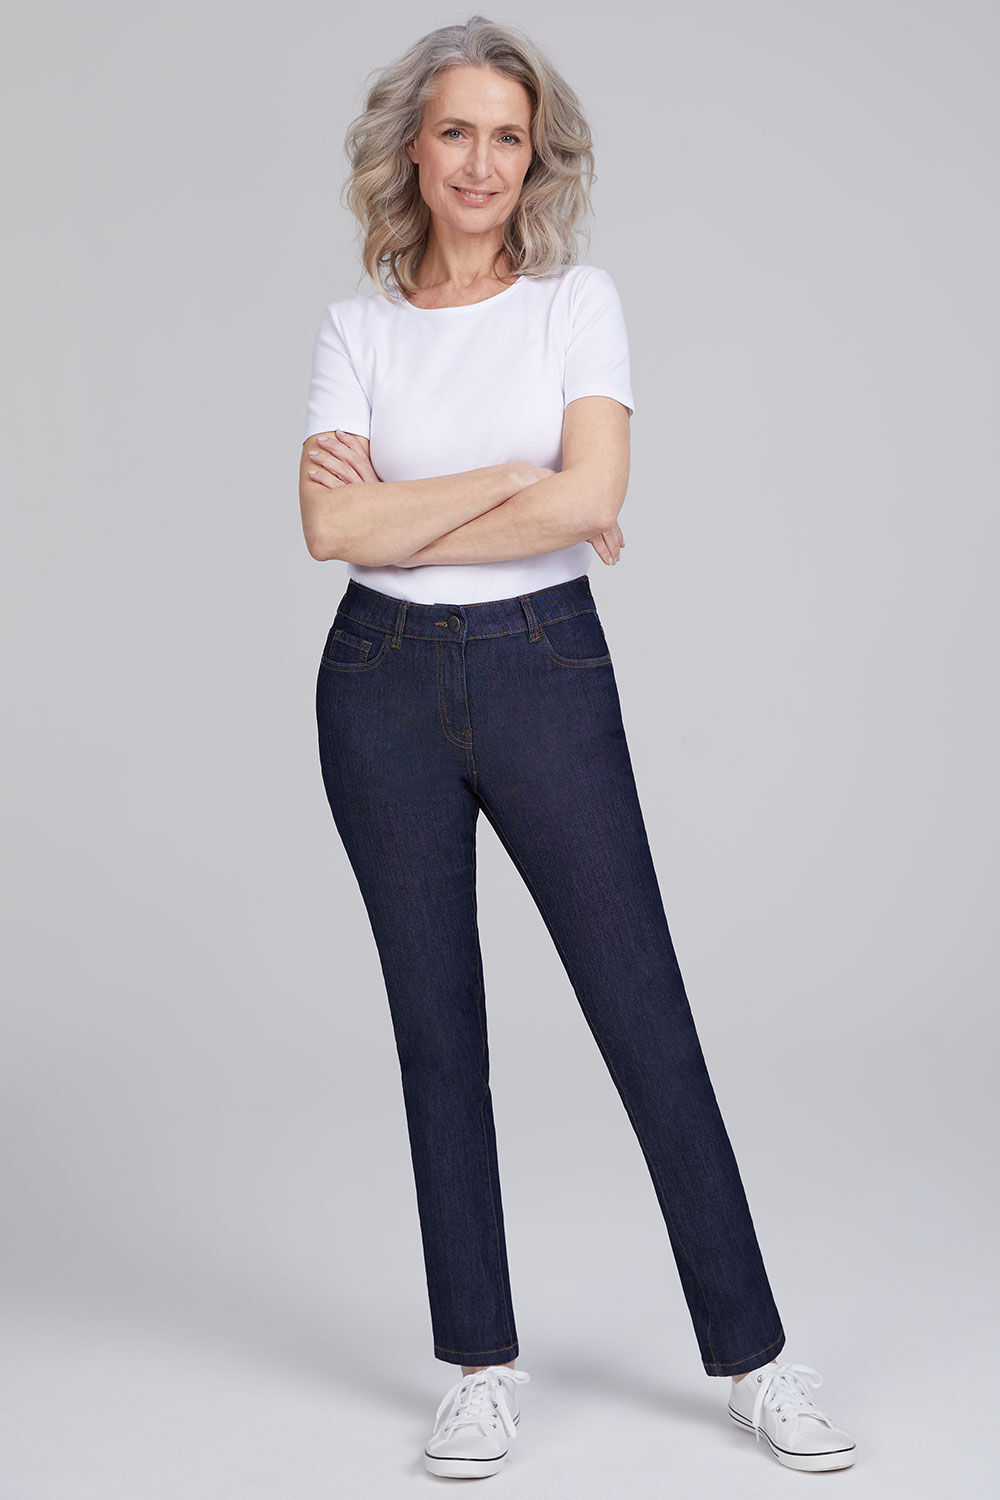 Bonmarche Denim Susie Slim Leg Jean - Blue - Size 20